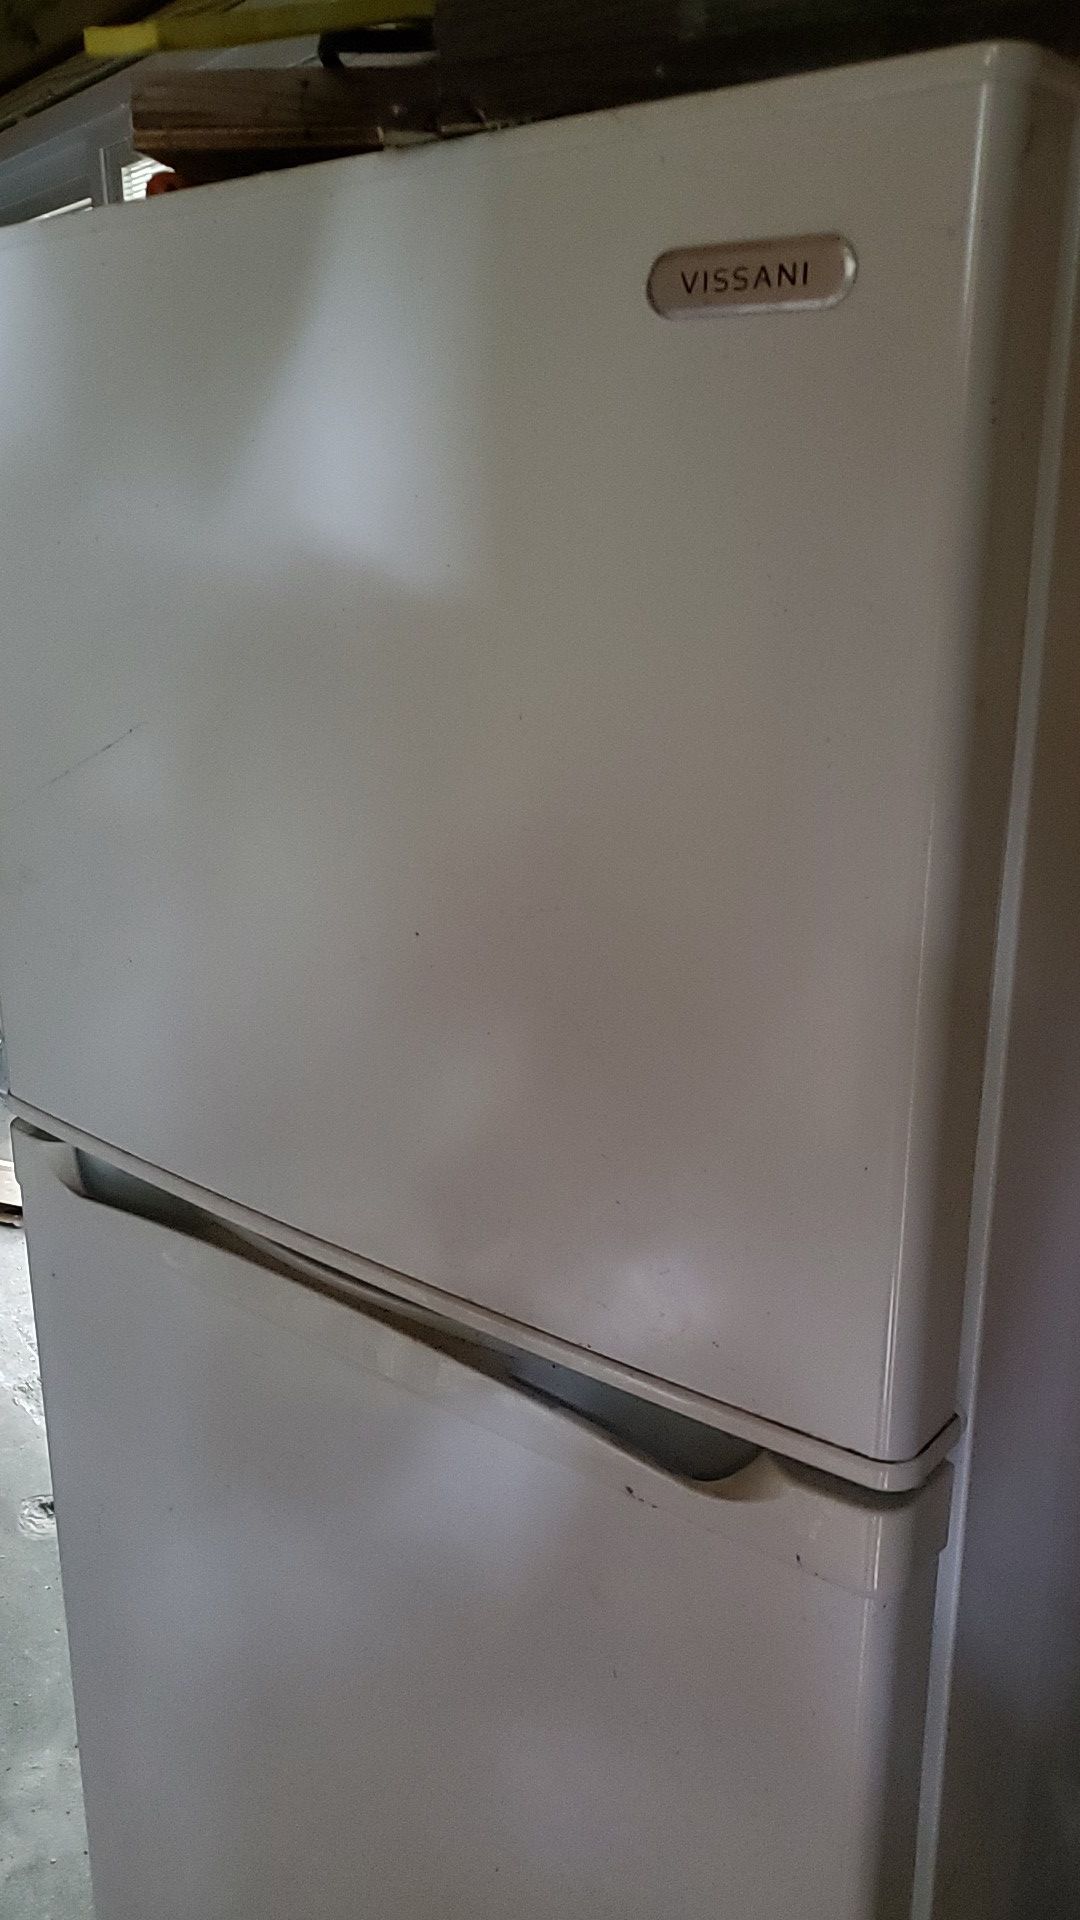 Vissani refrigerator